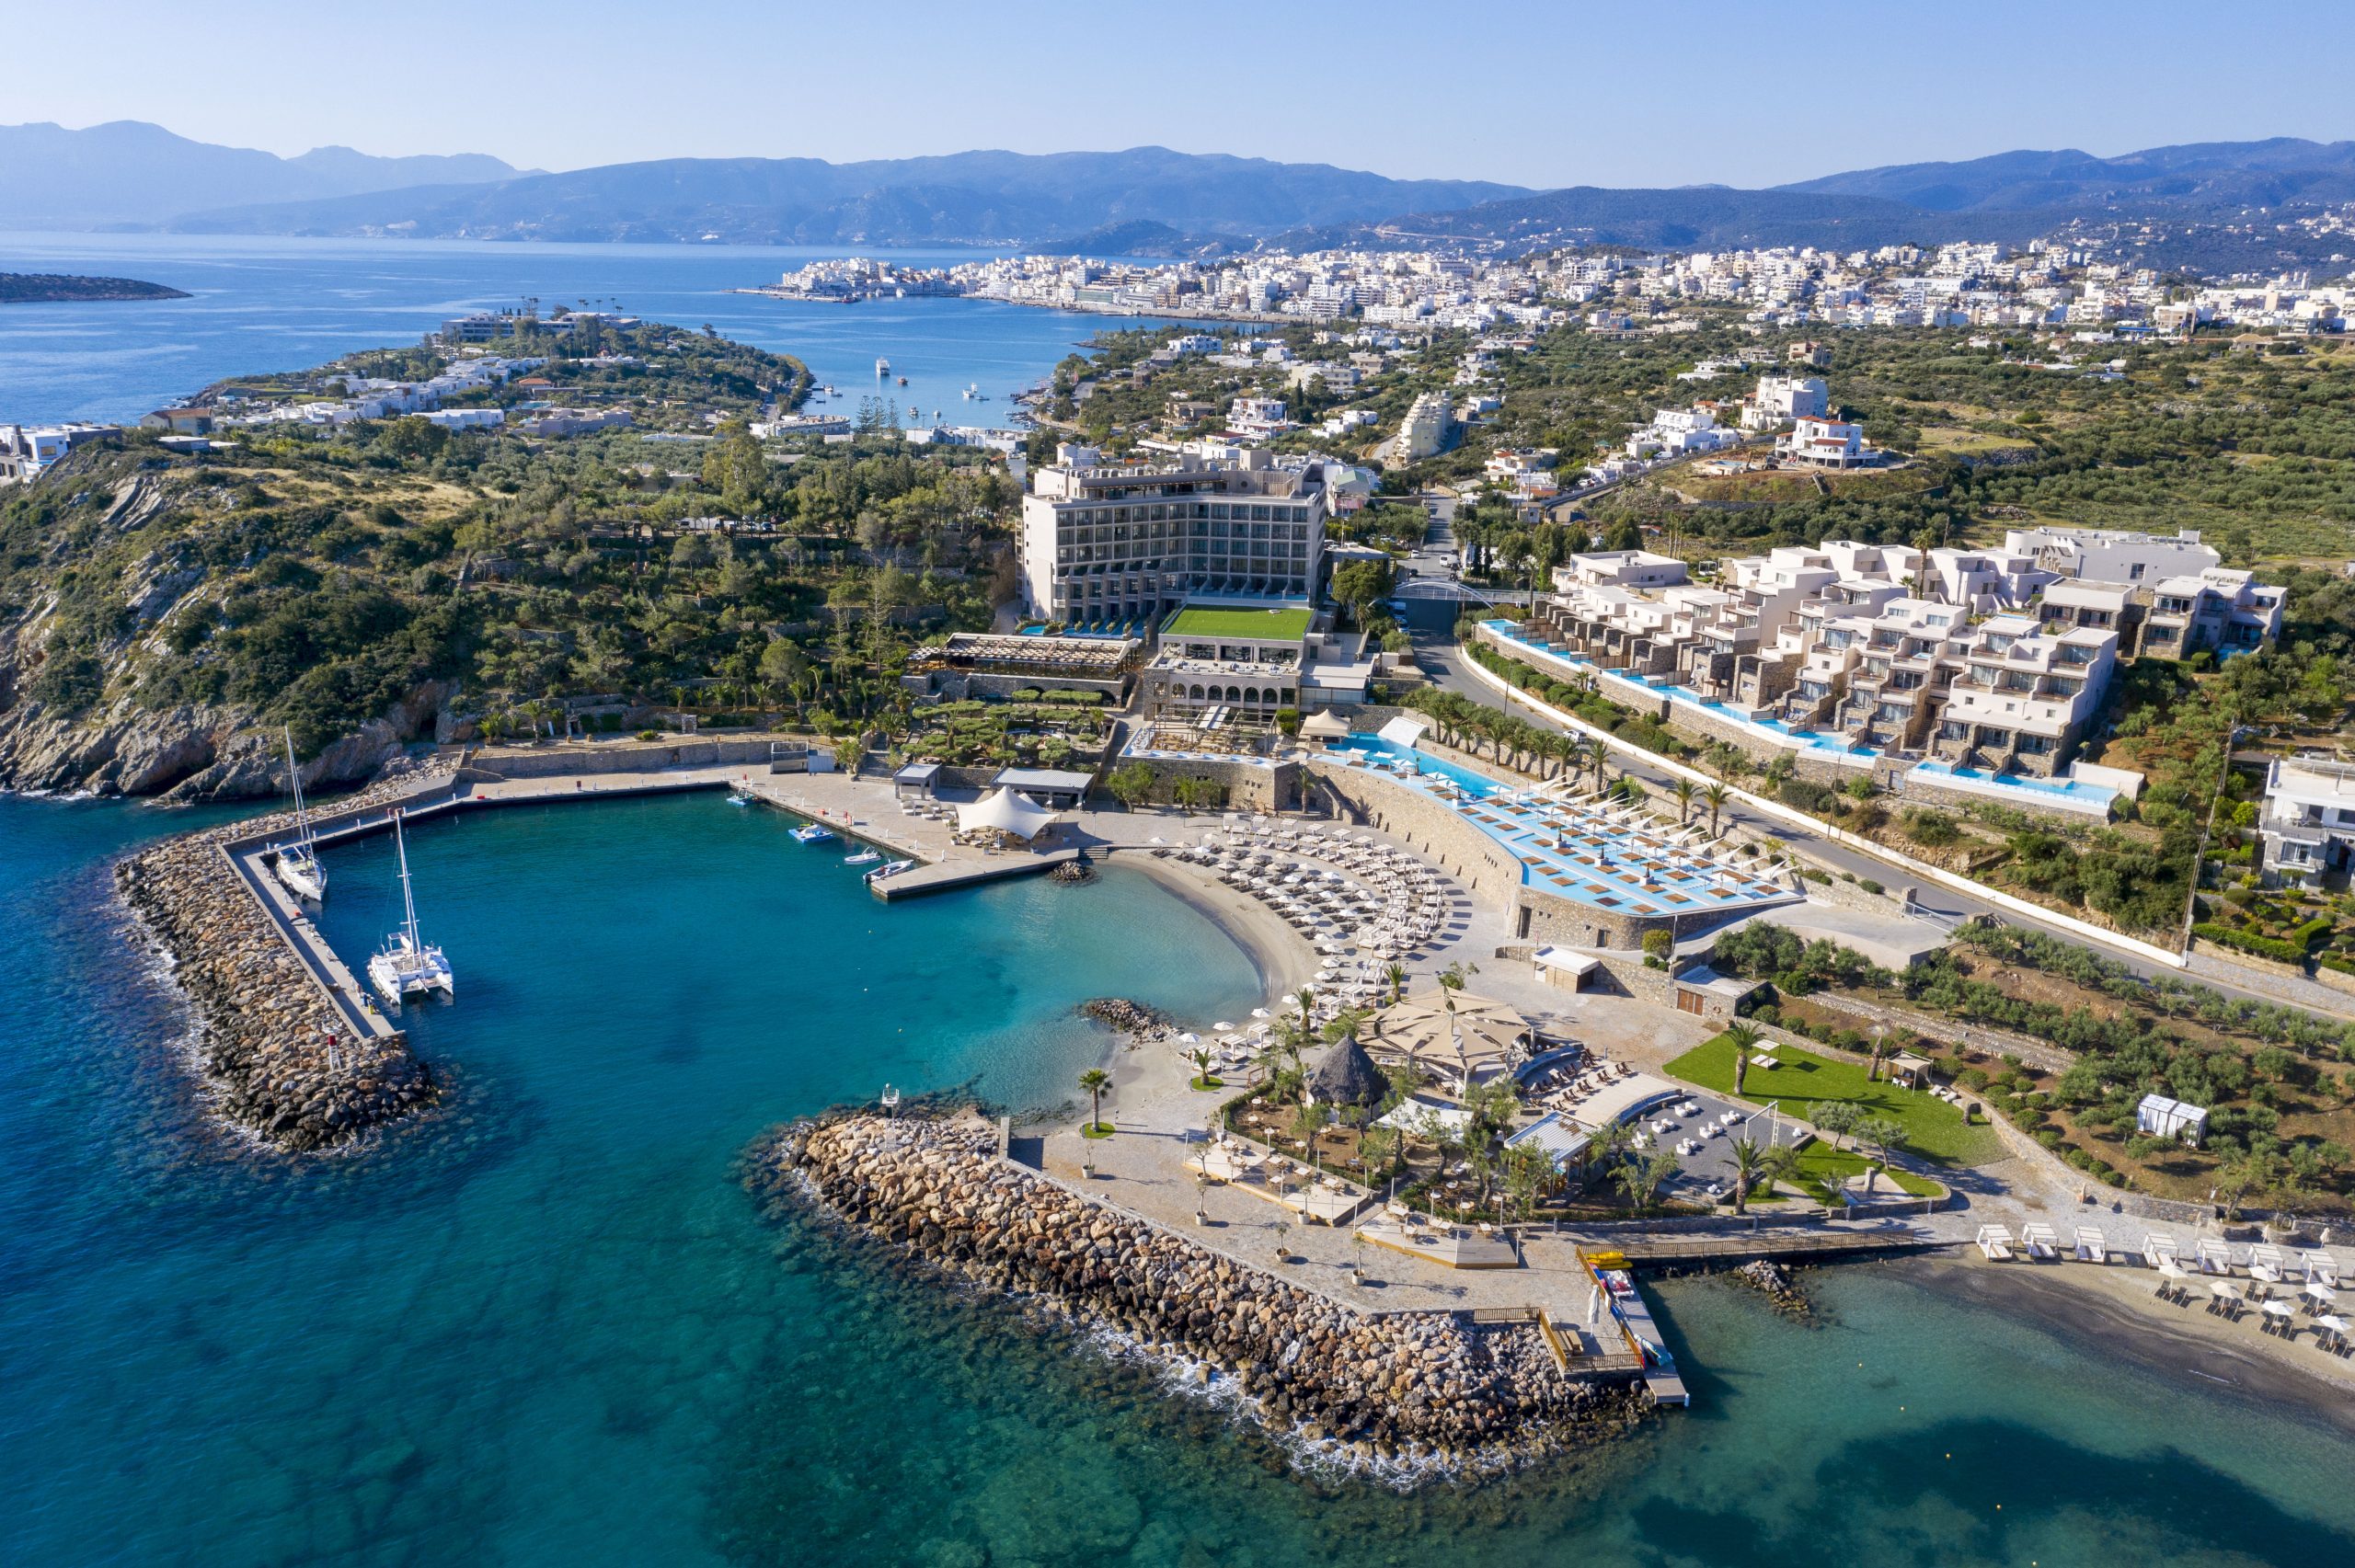 Wyndham Grand Crete Mirabello Bay: Ο απόλυτος προορισμός για τις καλοκαιρινές σου διακοπές βρίσκεται στην Κρήτη